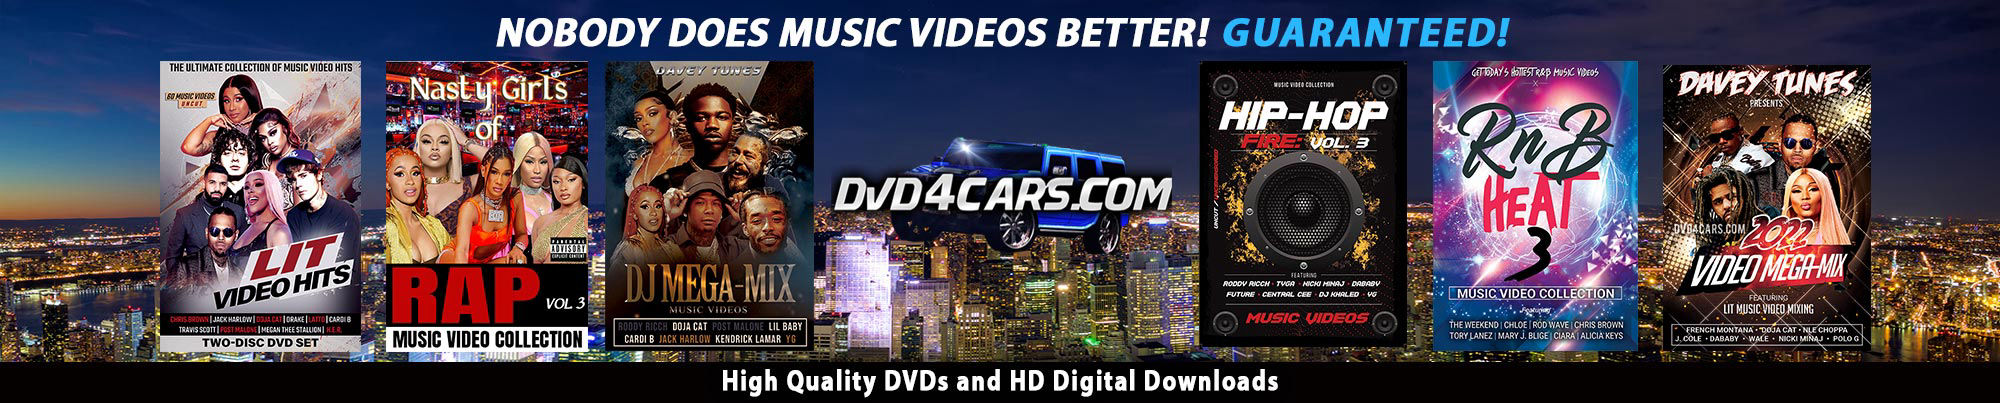 DVD4CARS - Music Videos on DVD